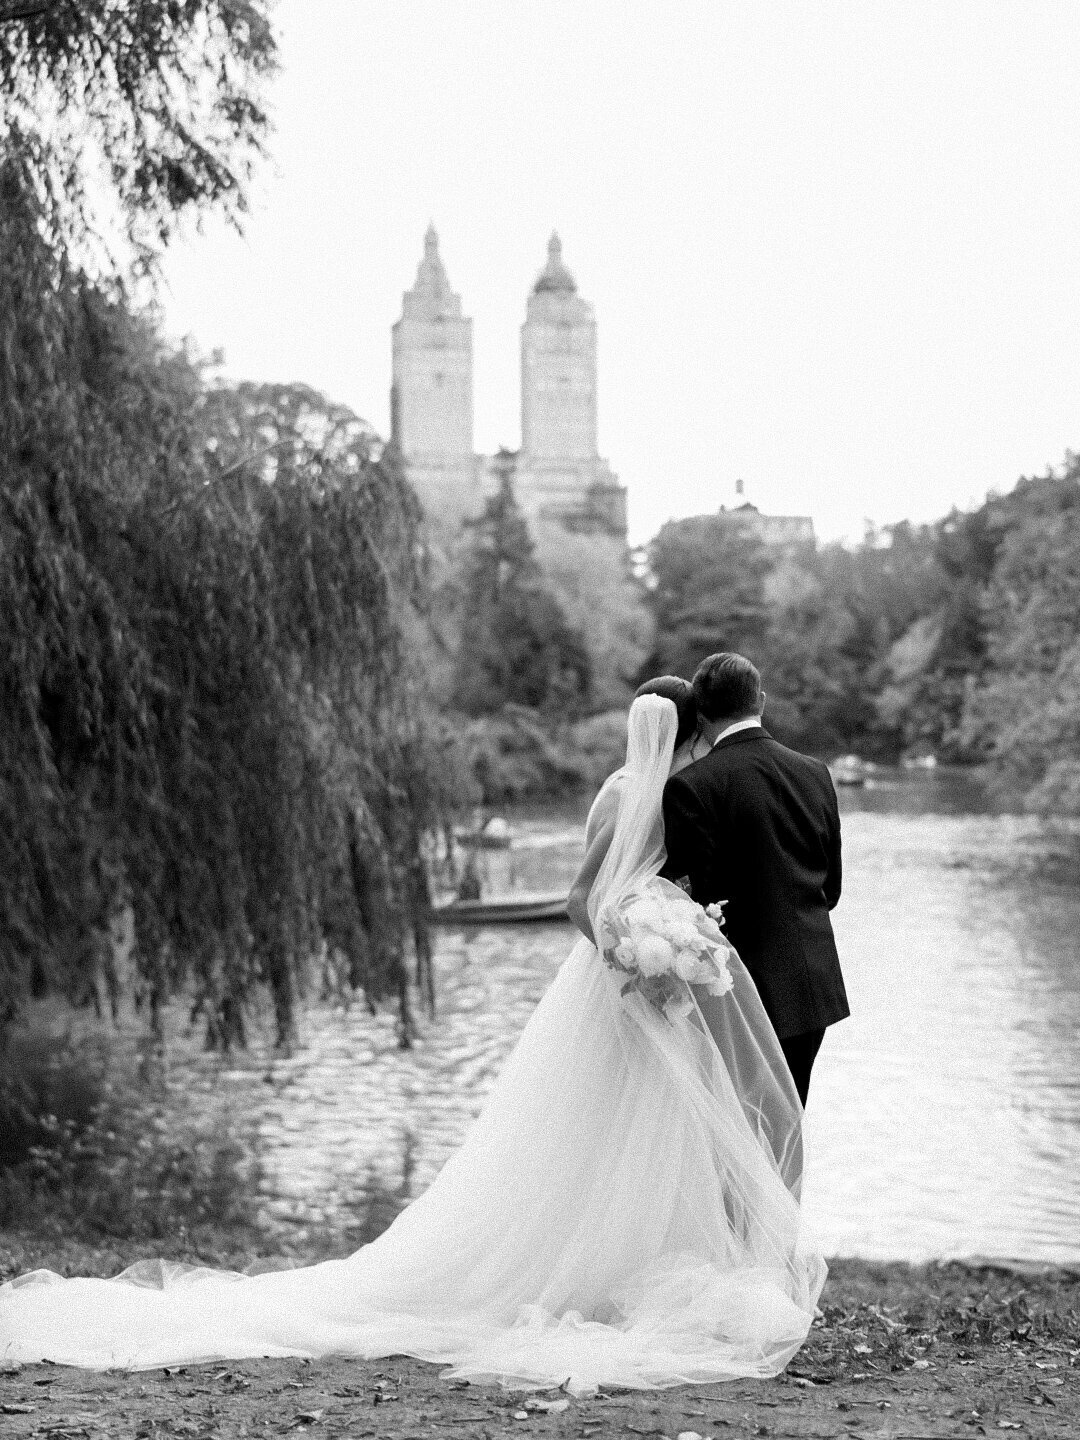 Magi Fisher - Central Park NYC - Loeb Boathouse Wedding - 1